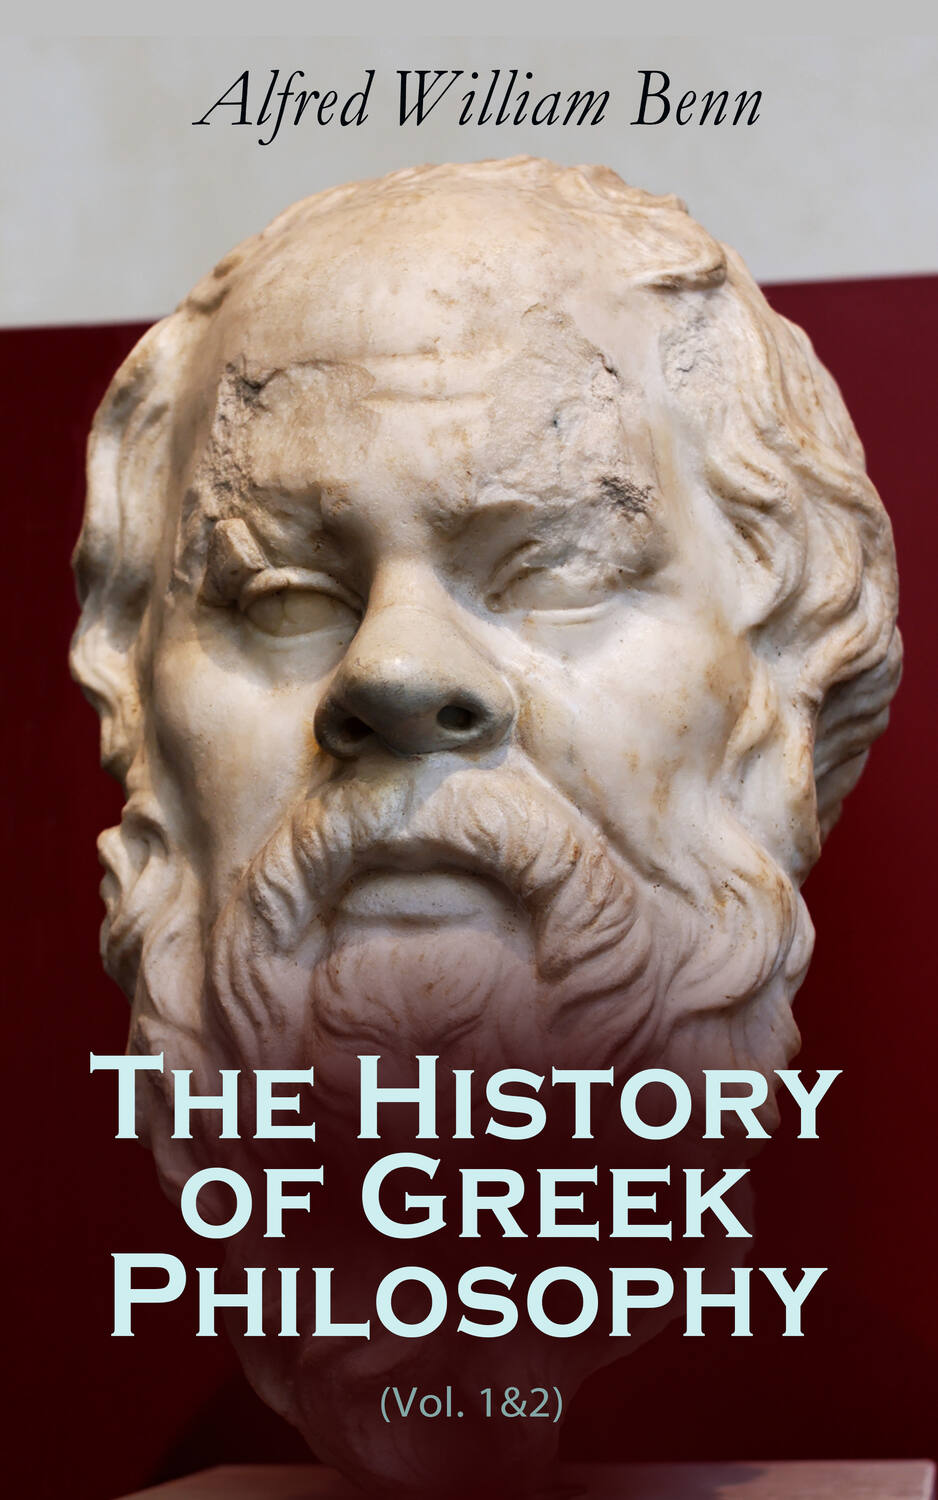 The History of Greek Philosophy (Vol. 1&2), Alfred William Benn ...